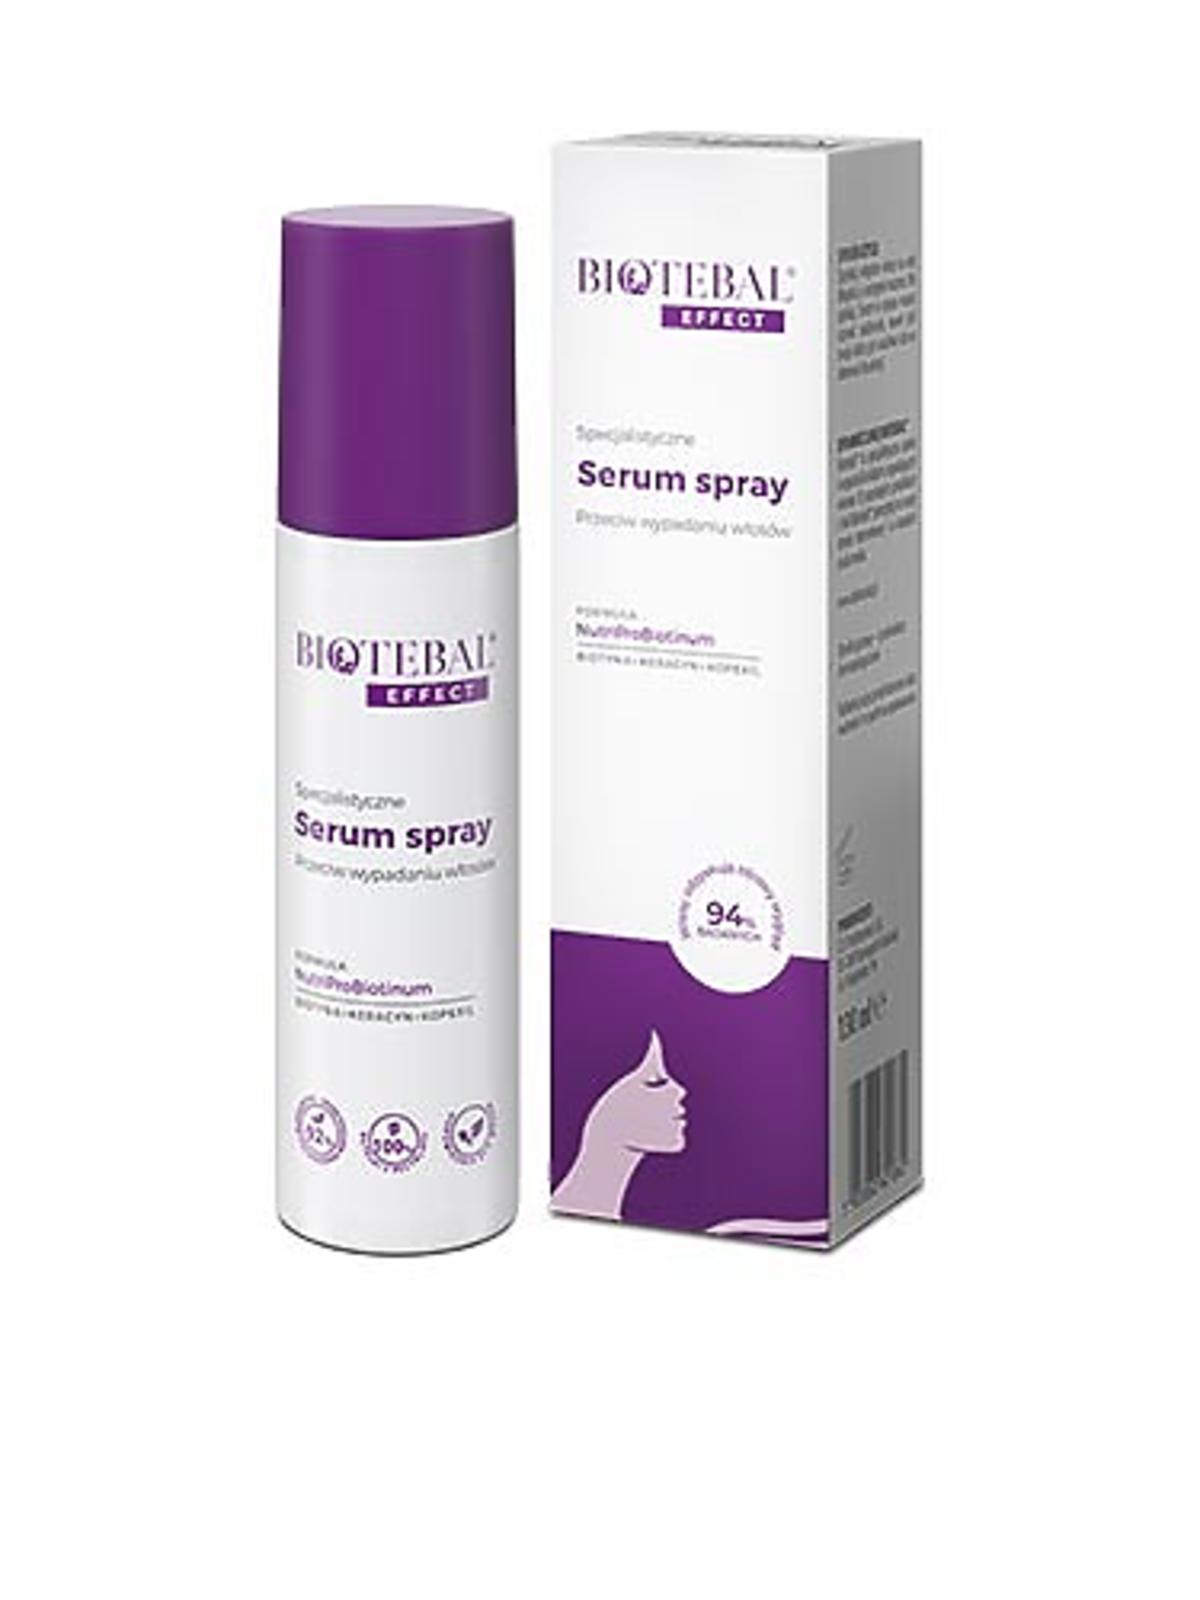 BIOTEBAL EFFECT serum spray